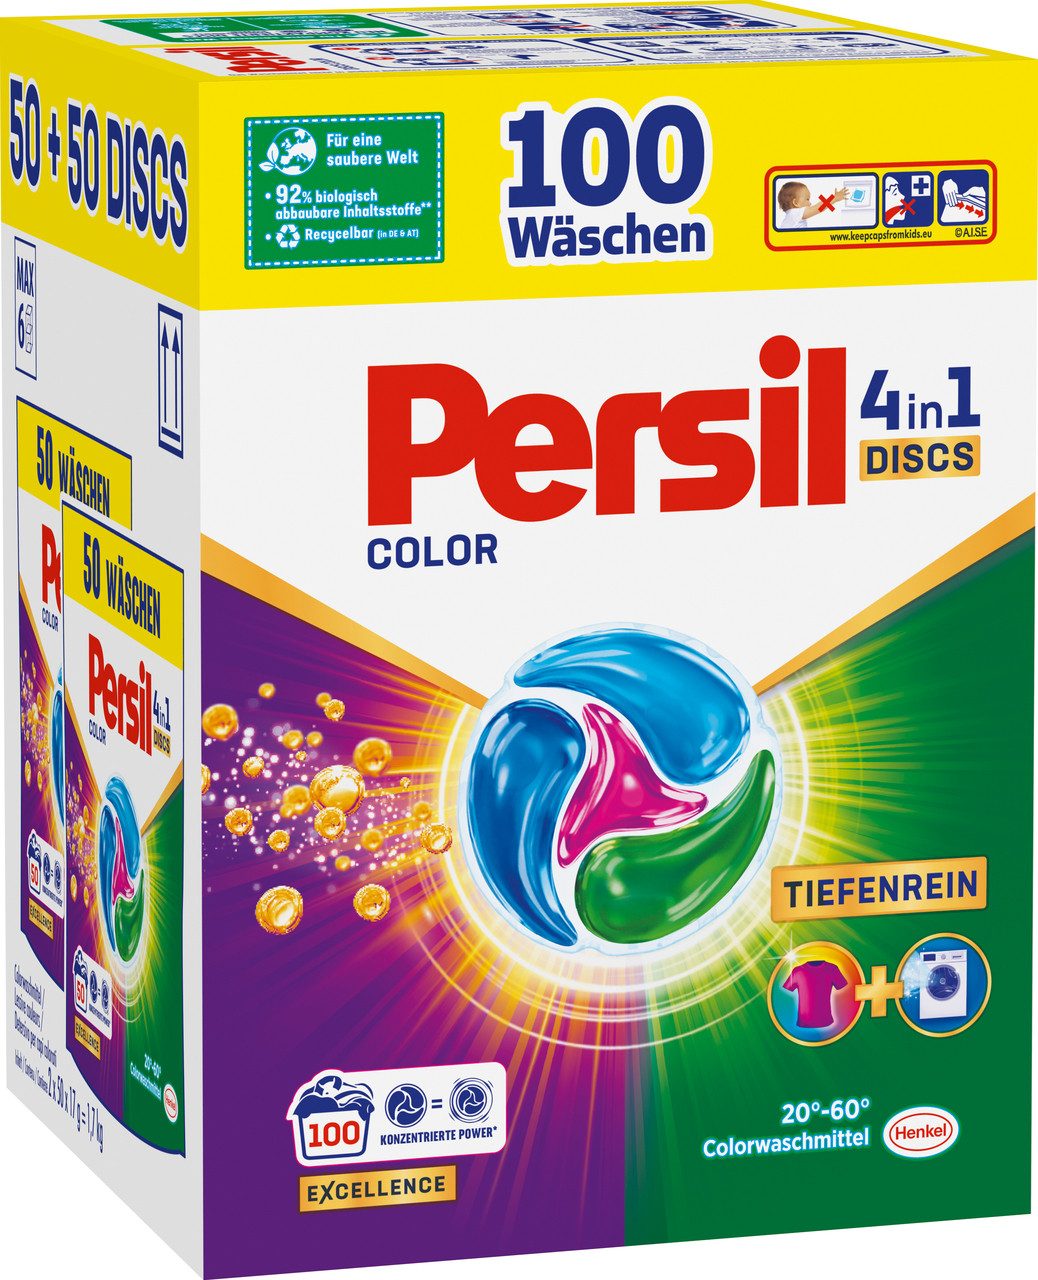 Persil Color 4-in-1 Discs 100 WL Colorwaschmittel (Vorratspack, [100-St. Kapseln mit Tiefenrein Technologie)